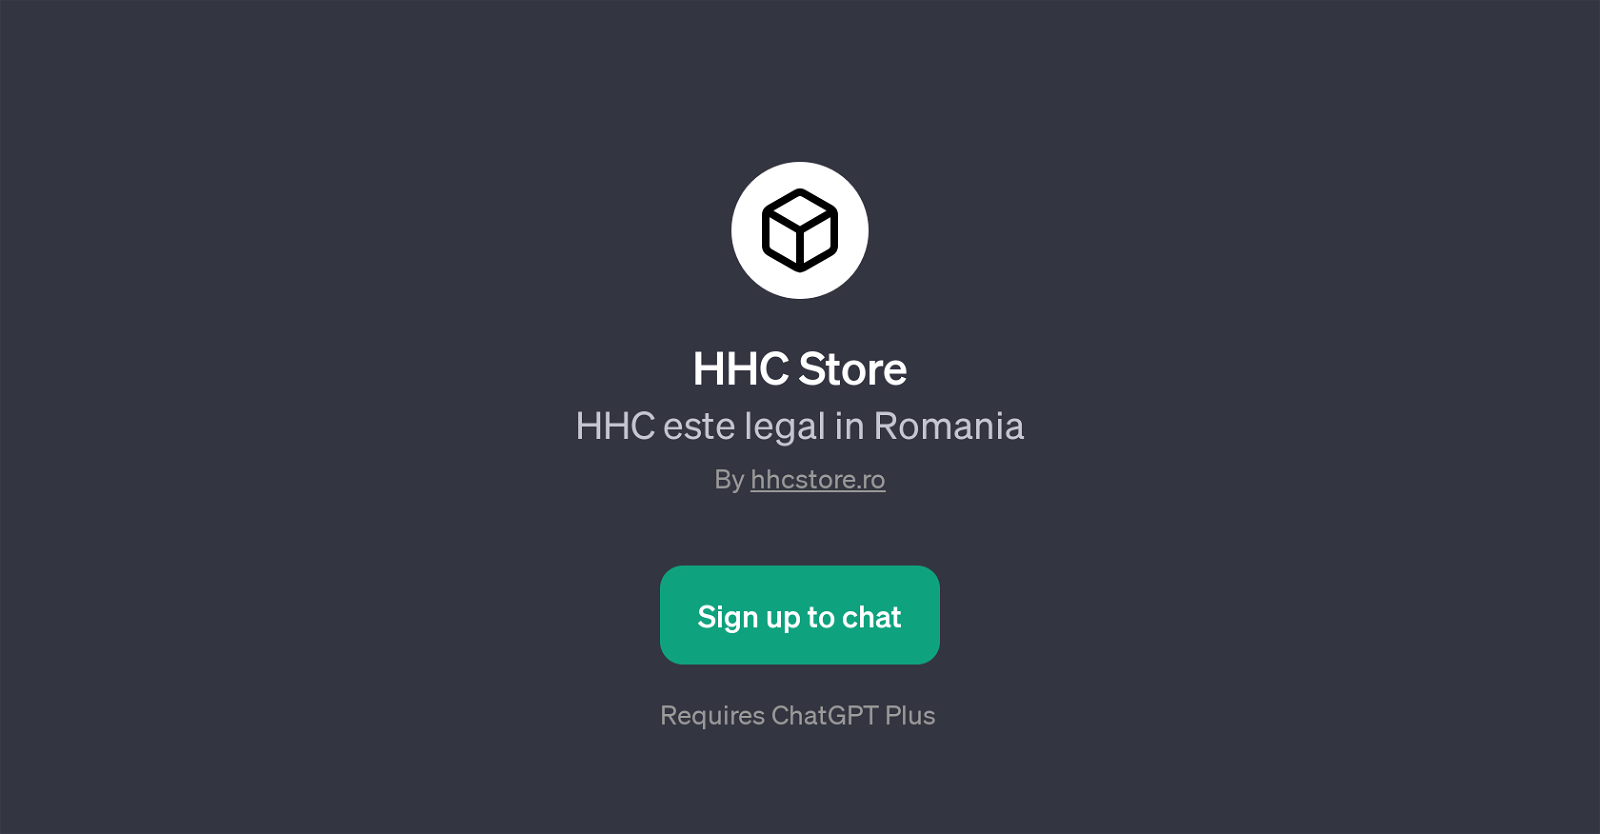 HHC Store website